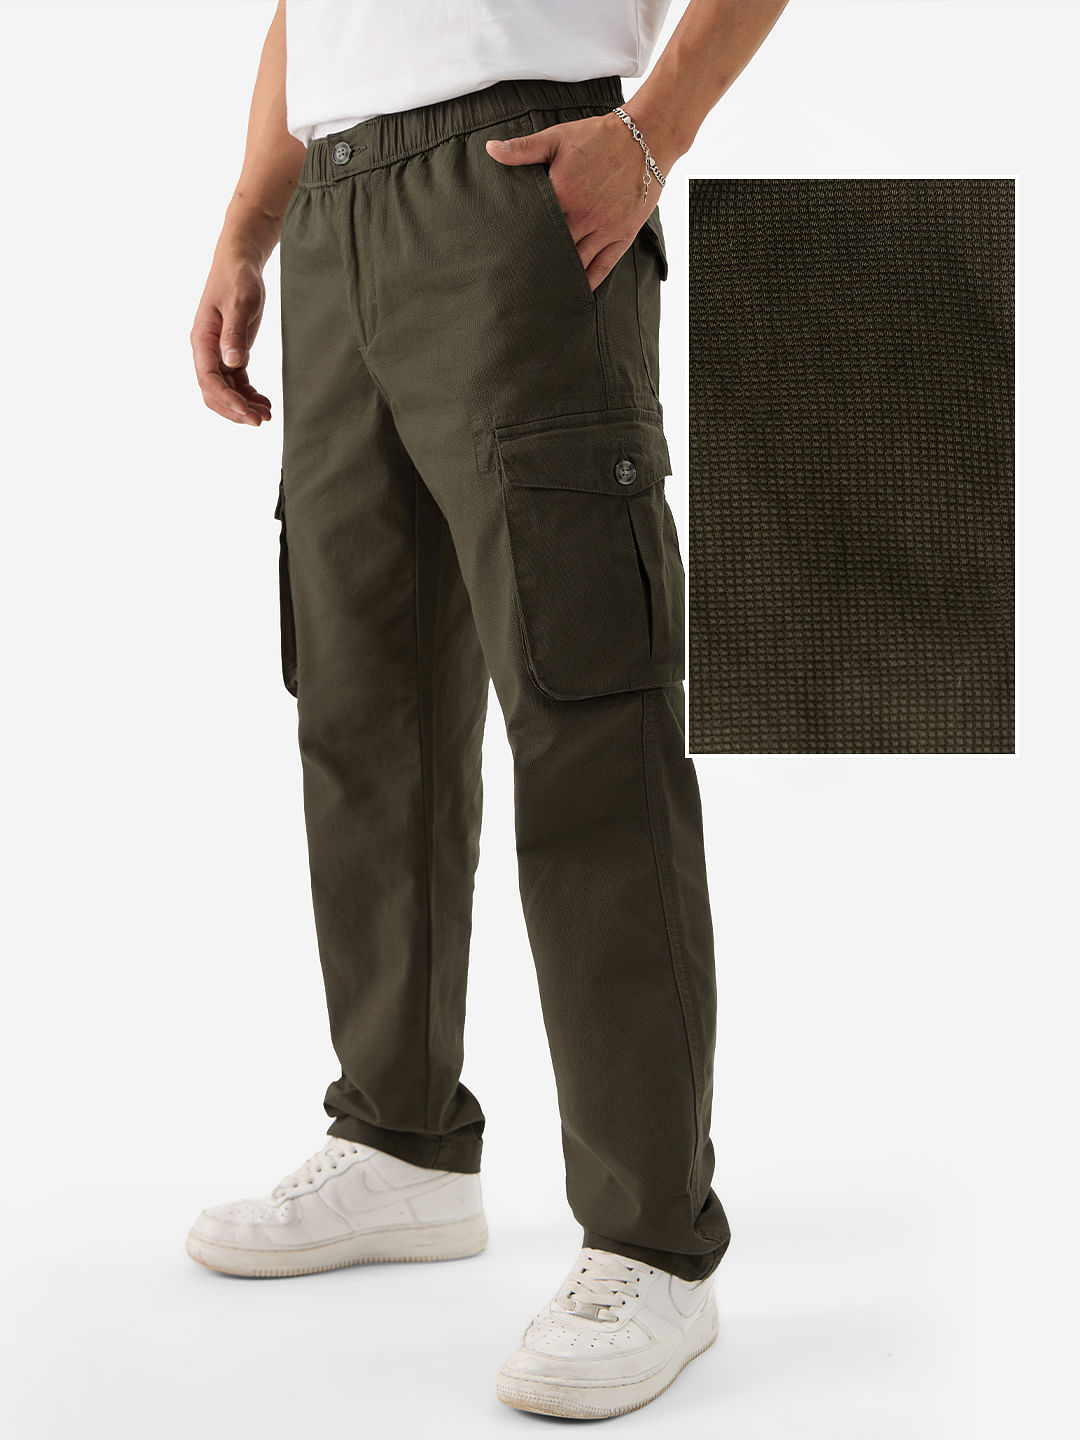 Match Men's Wild Cargo Pants | eBay